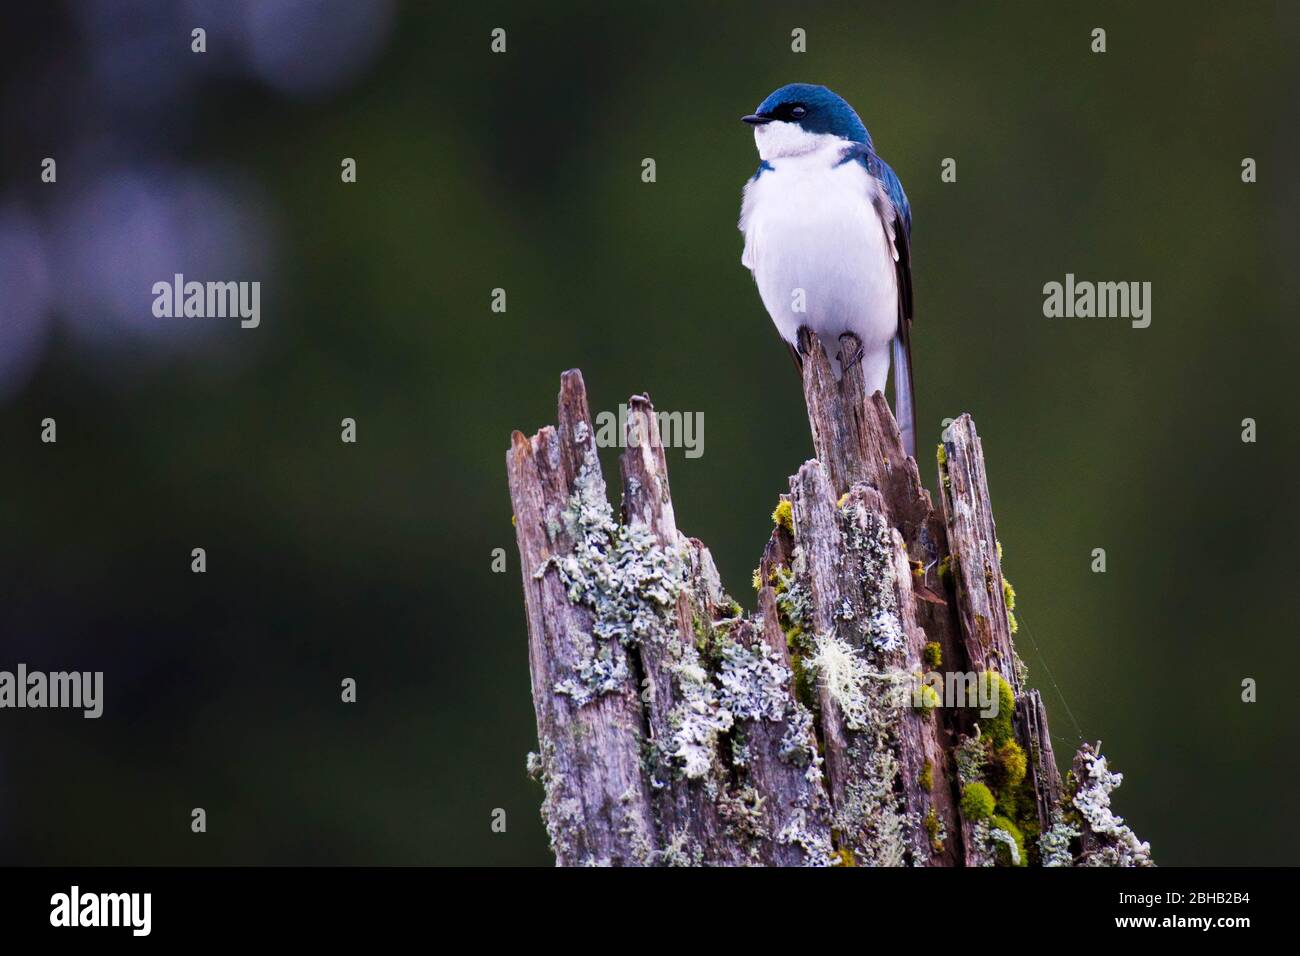 Male tree swallow (Tachycineta bicolor) perched on rotten tree stump, Kellogg Lake, Snohomish County, Washington State, USA Stock Photo